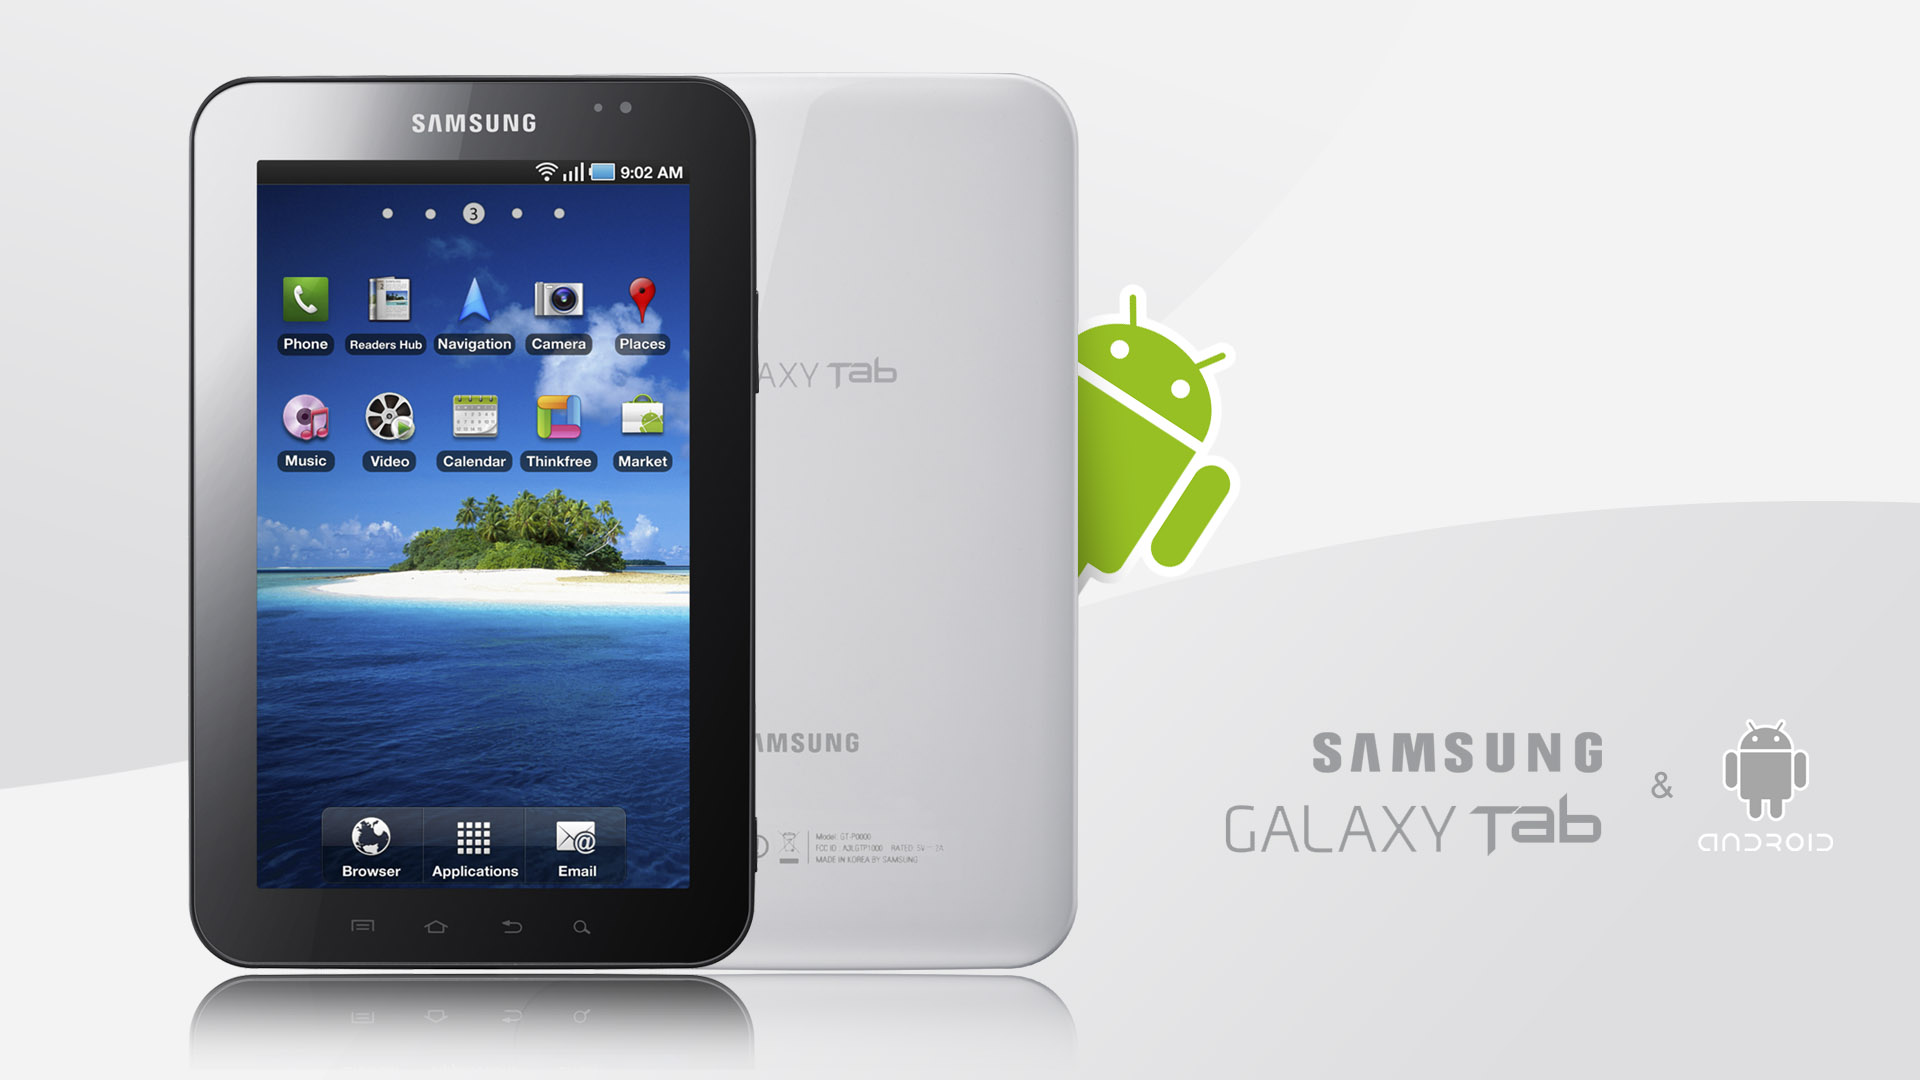 Samsung Galaxy Tab Android HD Image Gadgets